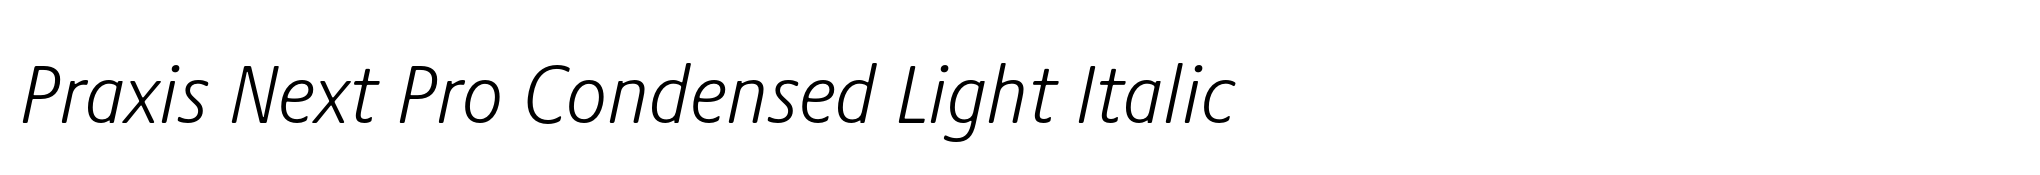 Praxis Next Pro Condensed Light Italic image